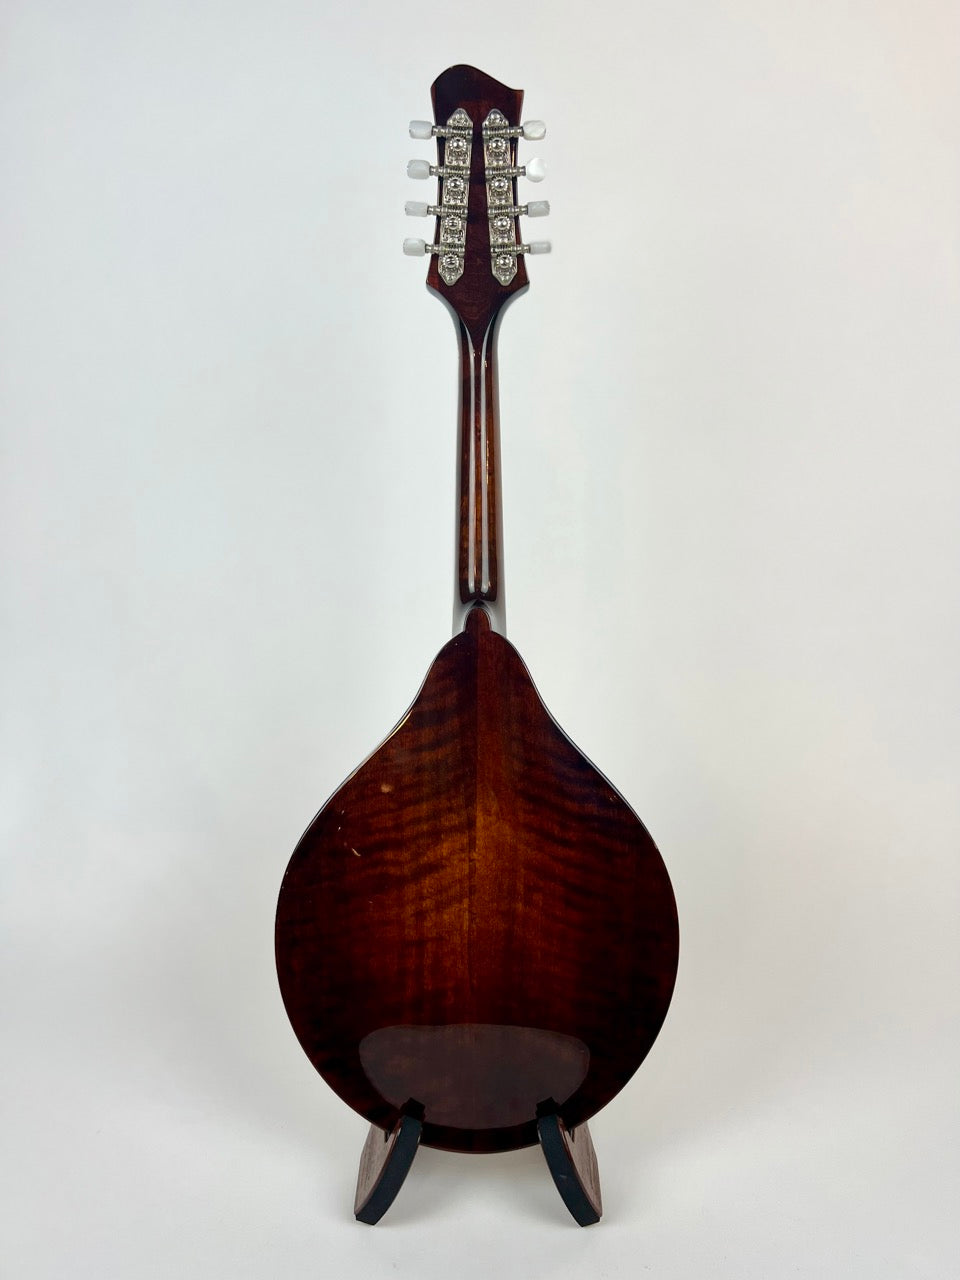 Eastman MD505 Sunburst A Style Mandolin